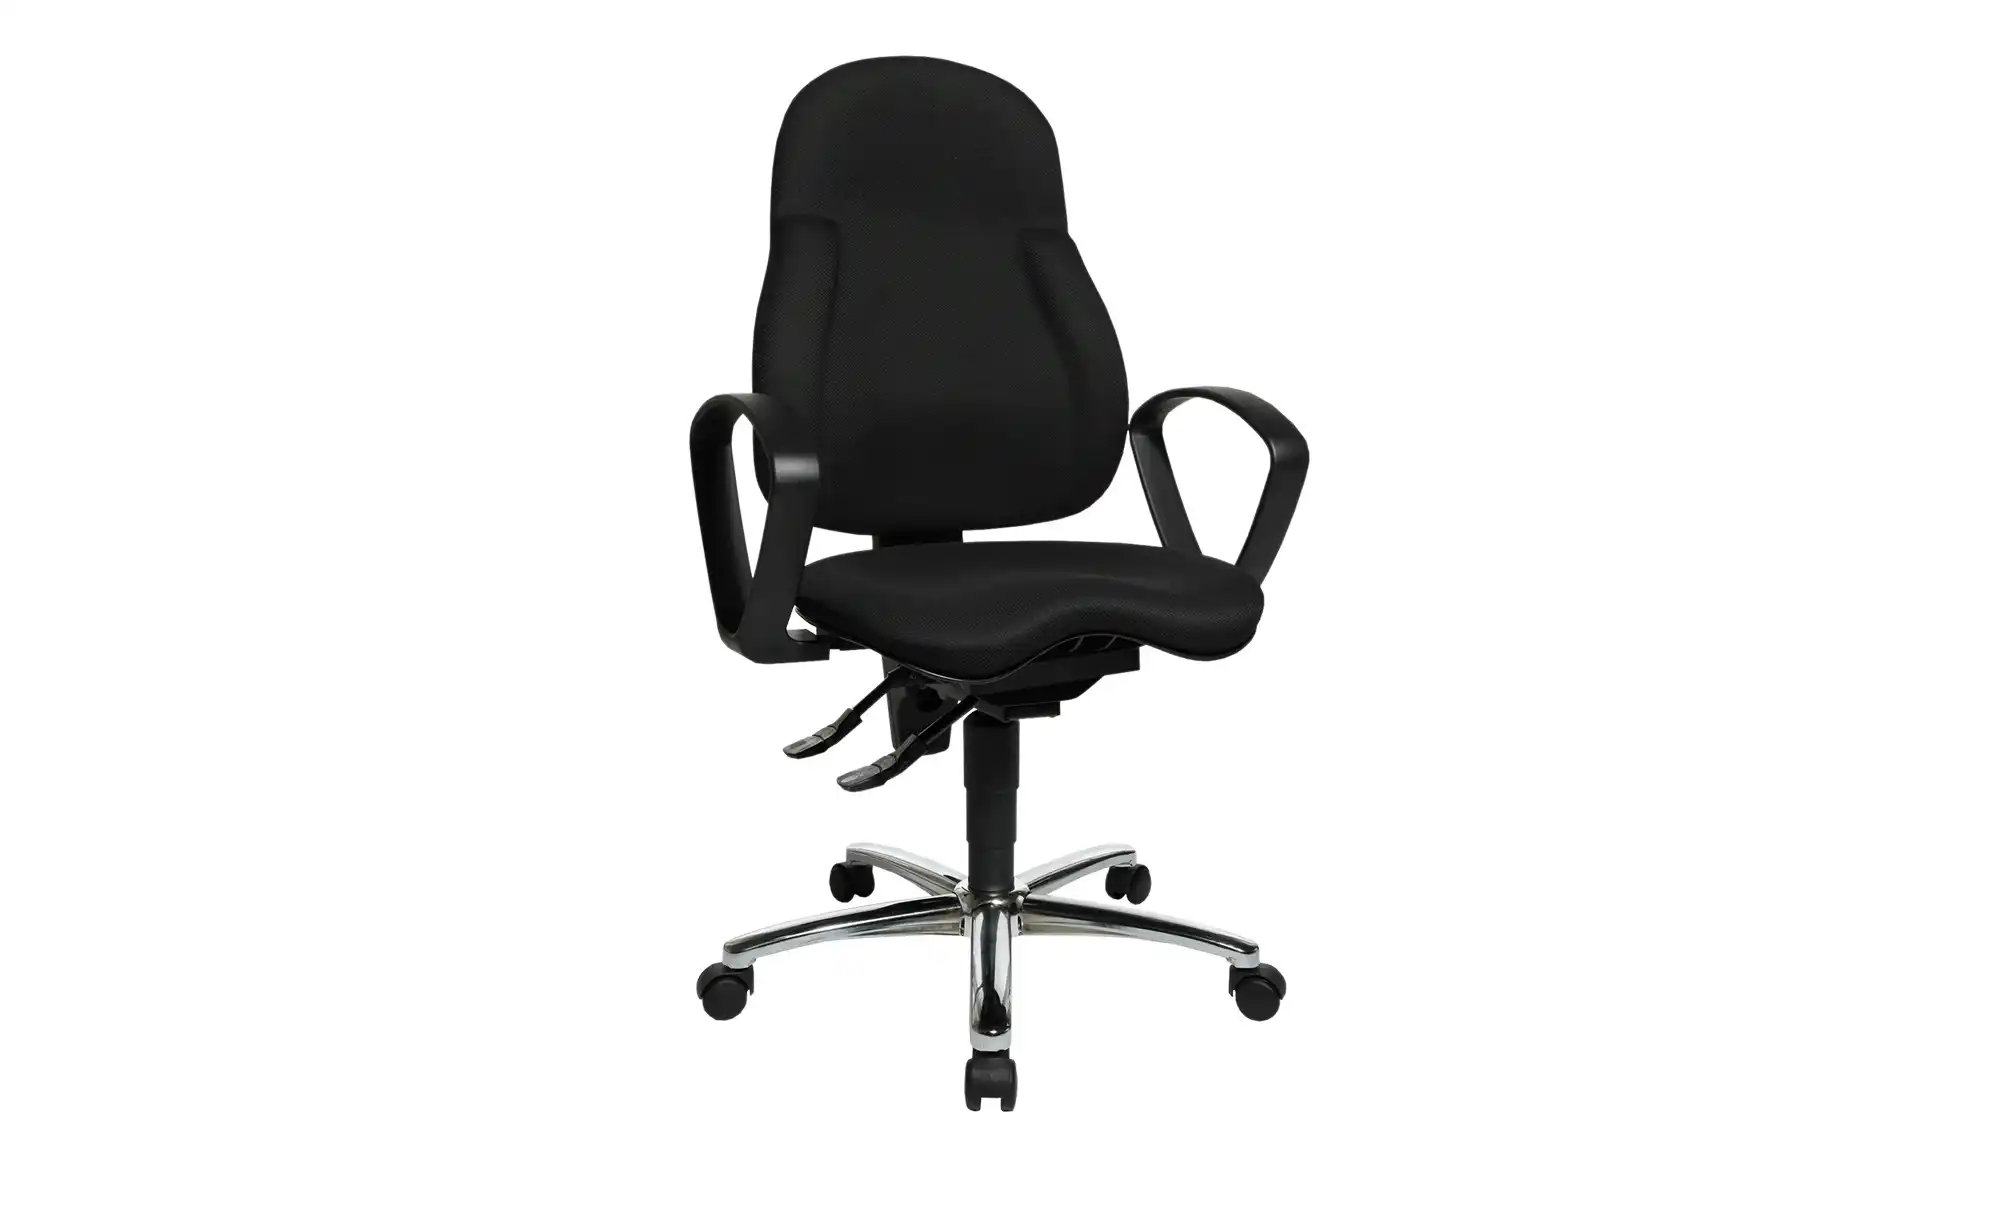 Bürodrehstuhl mit Armlehnen Sitness Basic100 ¦ schwarz Stühle Bürostühle Drehstühle Höffner  - Onlineshop Möbel Höffner